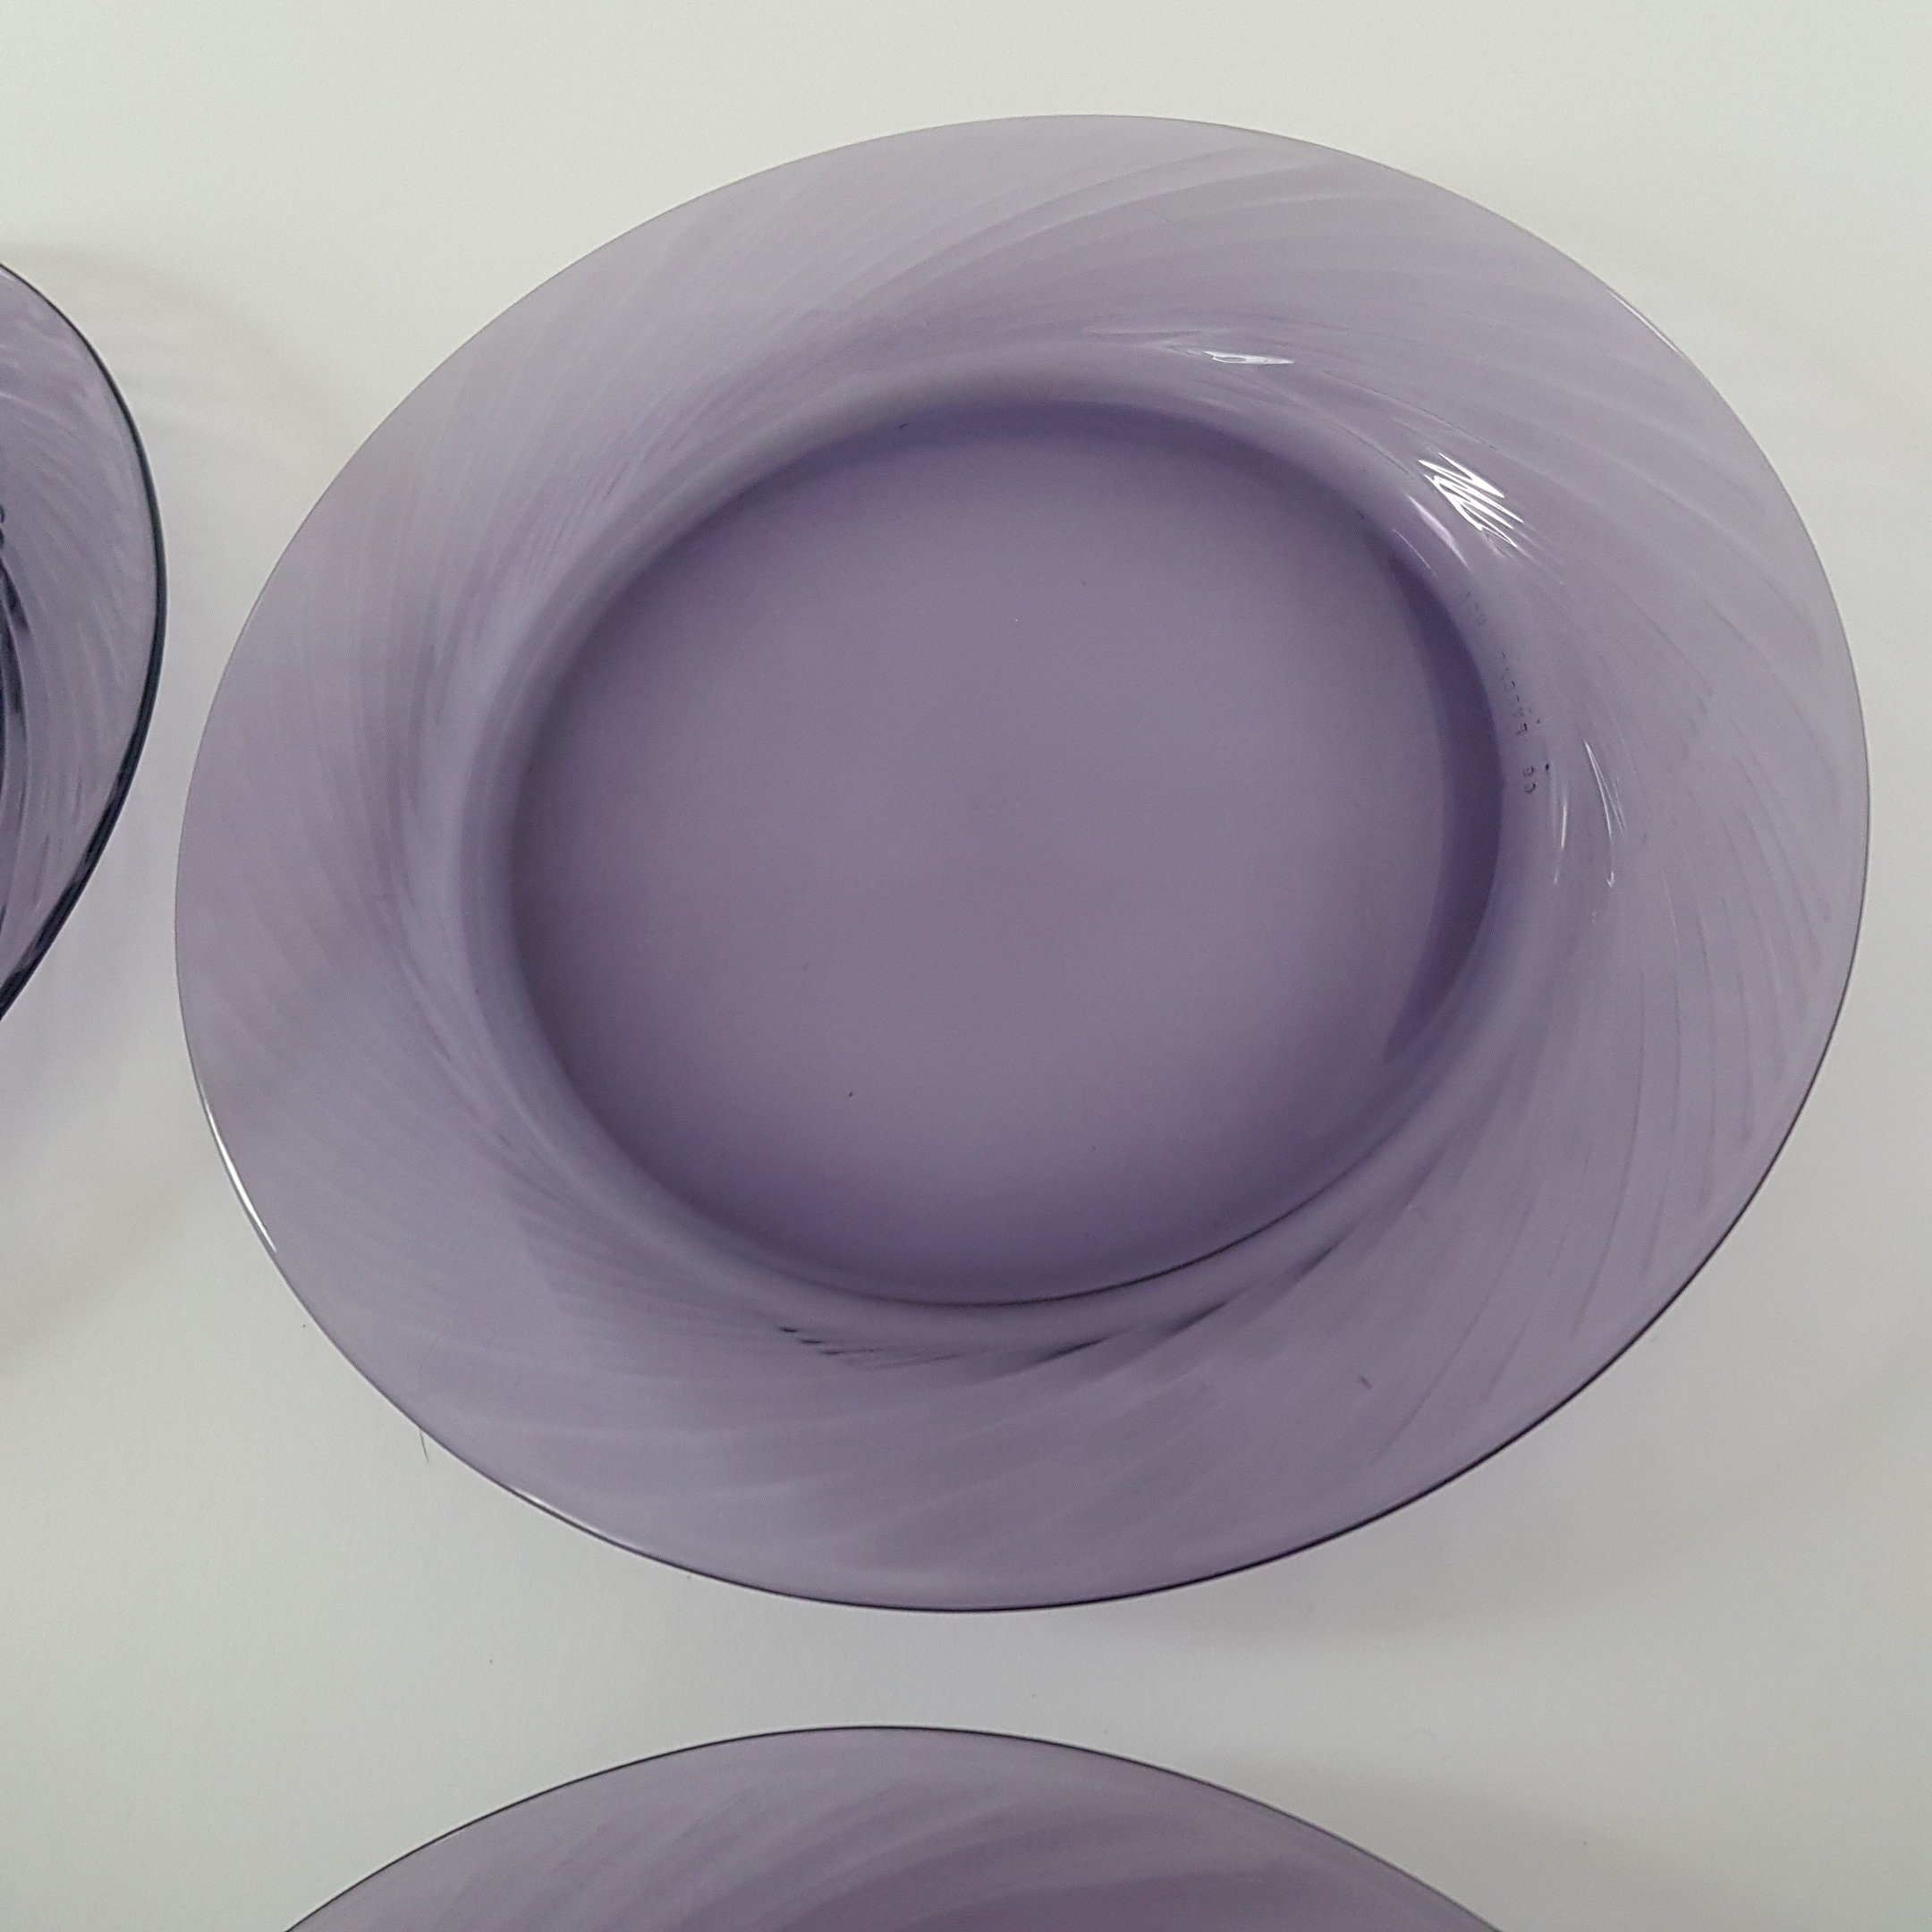 Violet Amethyst Purple PYREX Glass Baking Dishes 8x8 9x13